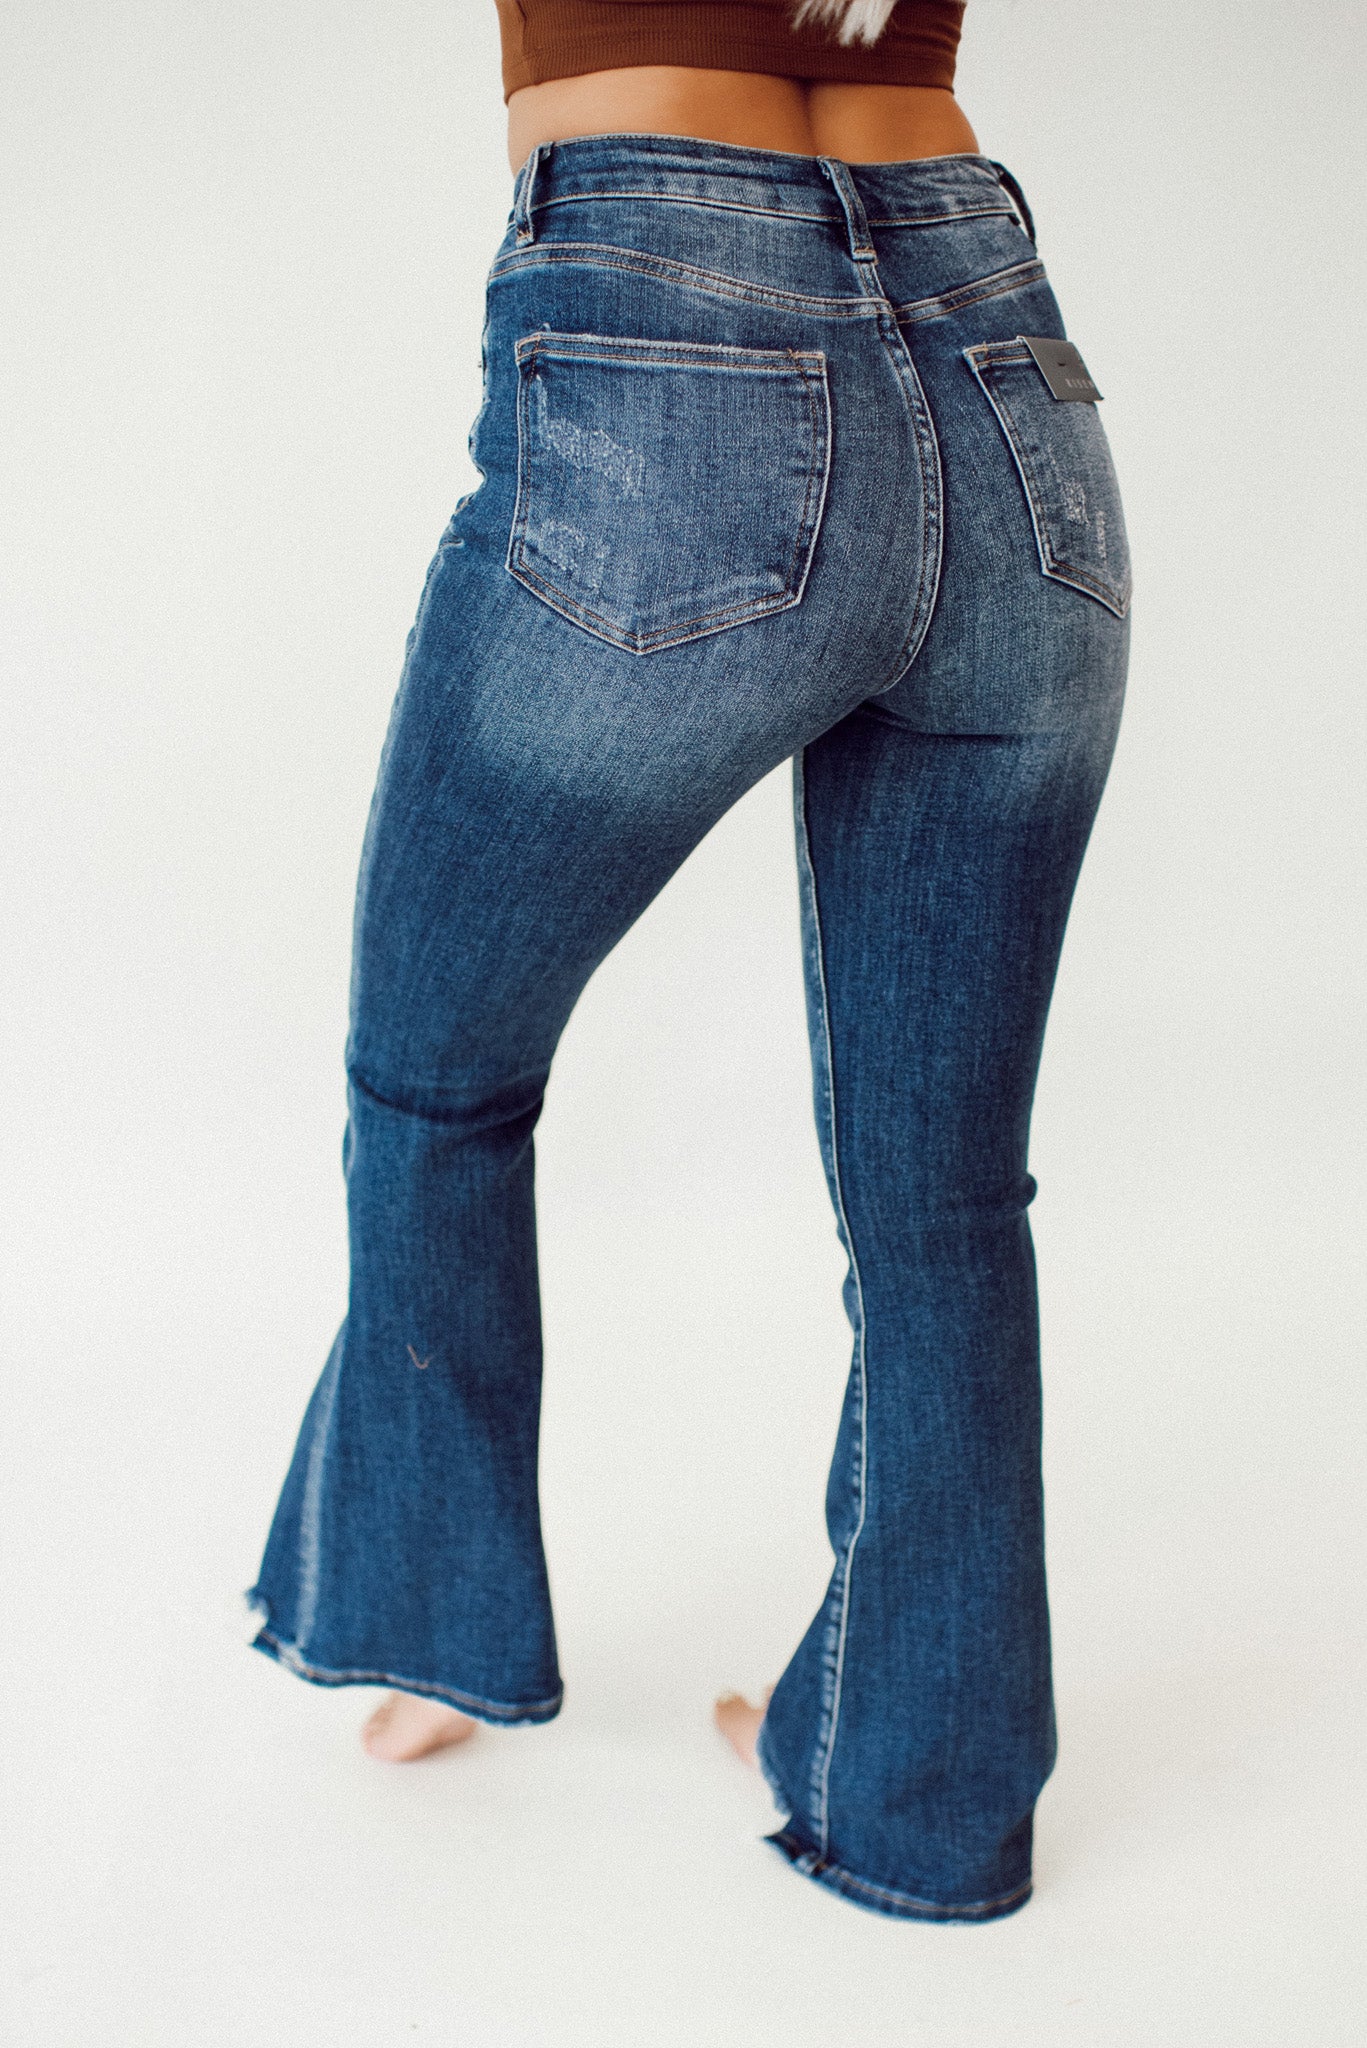 Risen Carina High Rise Vintage Wash Flare Jeans